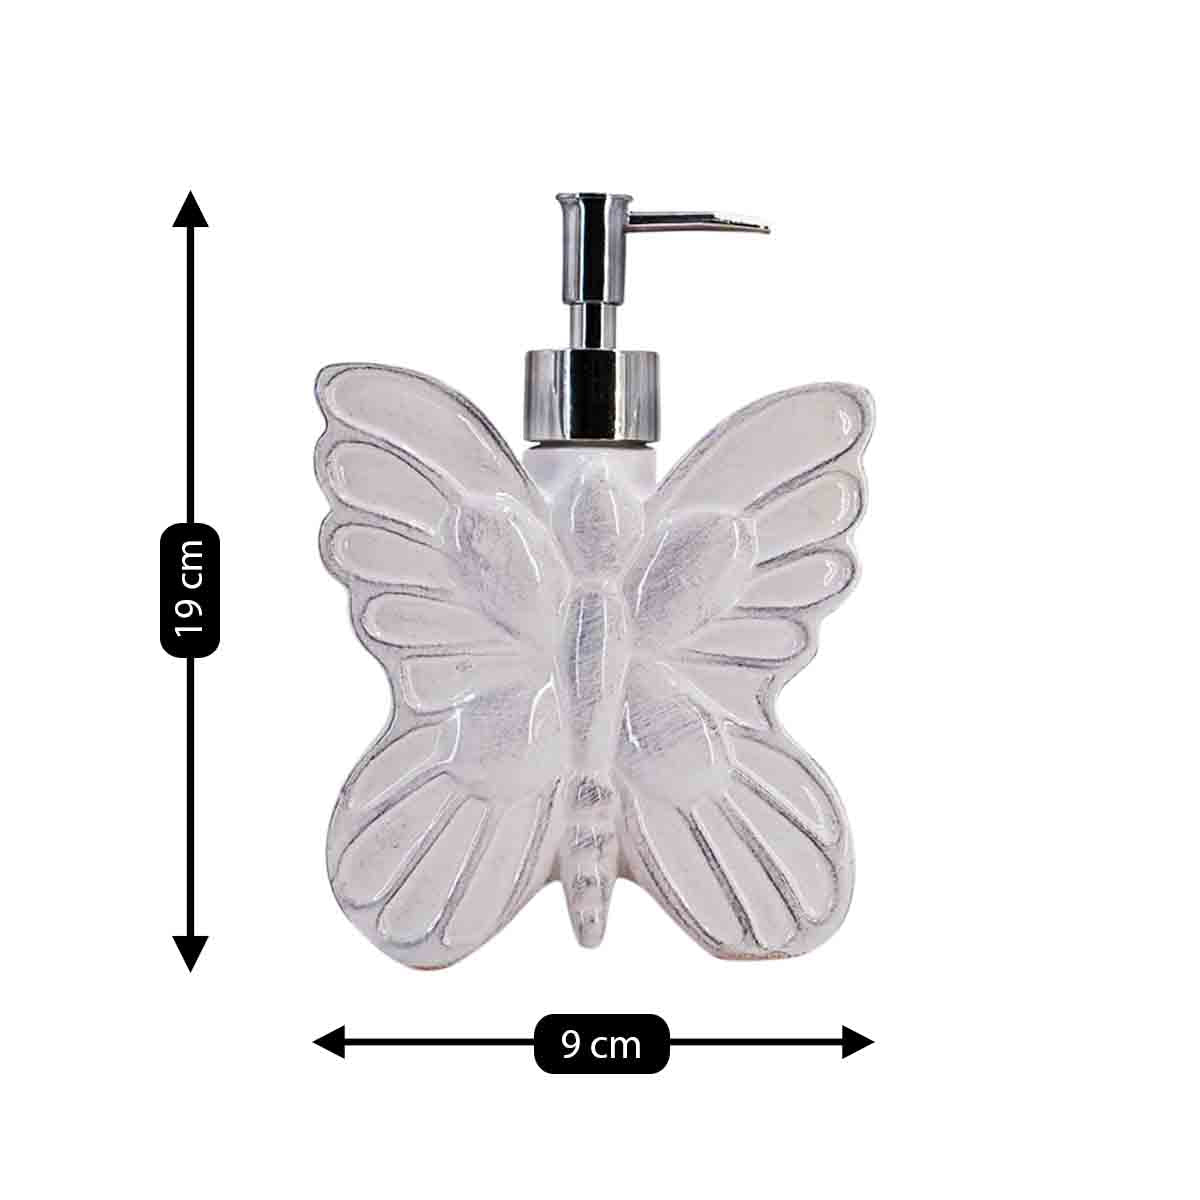 Ceramic Soap Dispenser Pump for Bathroom for Bath Gel, Lotion, Shampoo (7689)